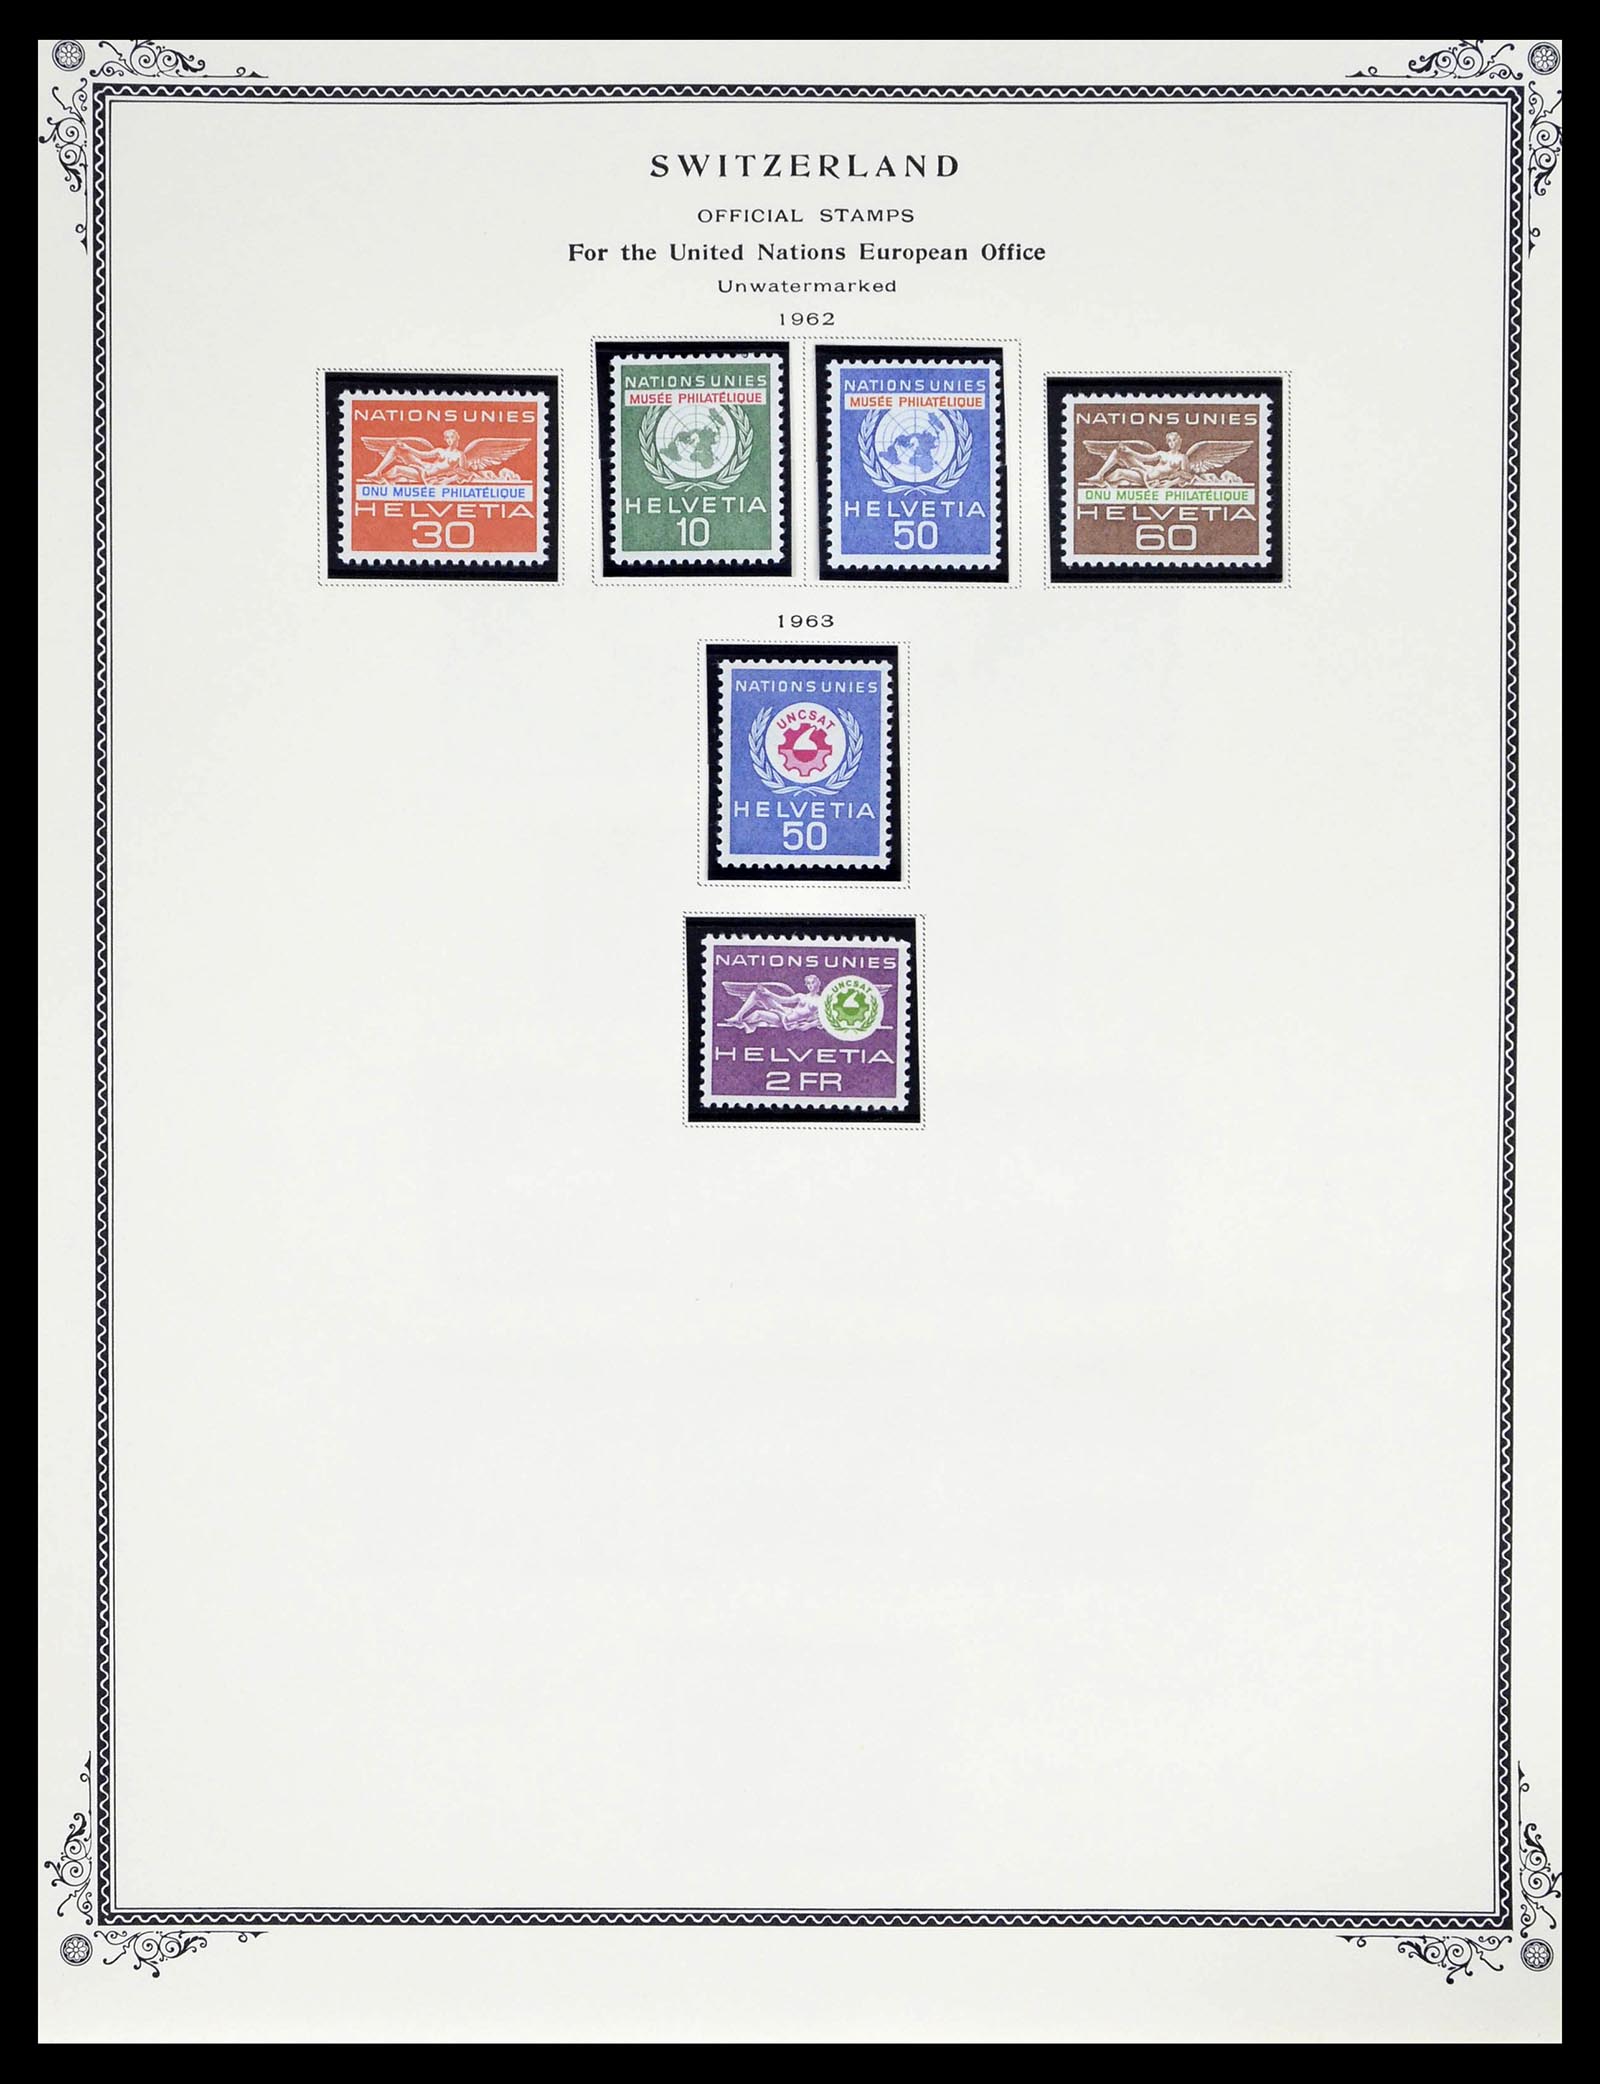 39178 0259 - Stamp collection 39178 Switzerland 1850-1989.